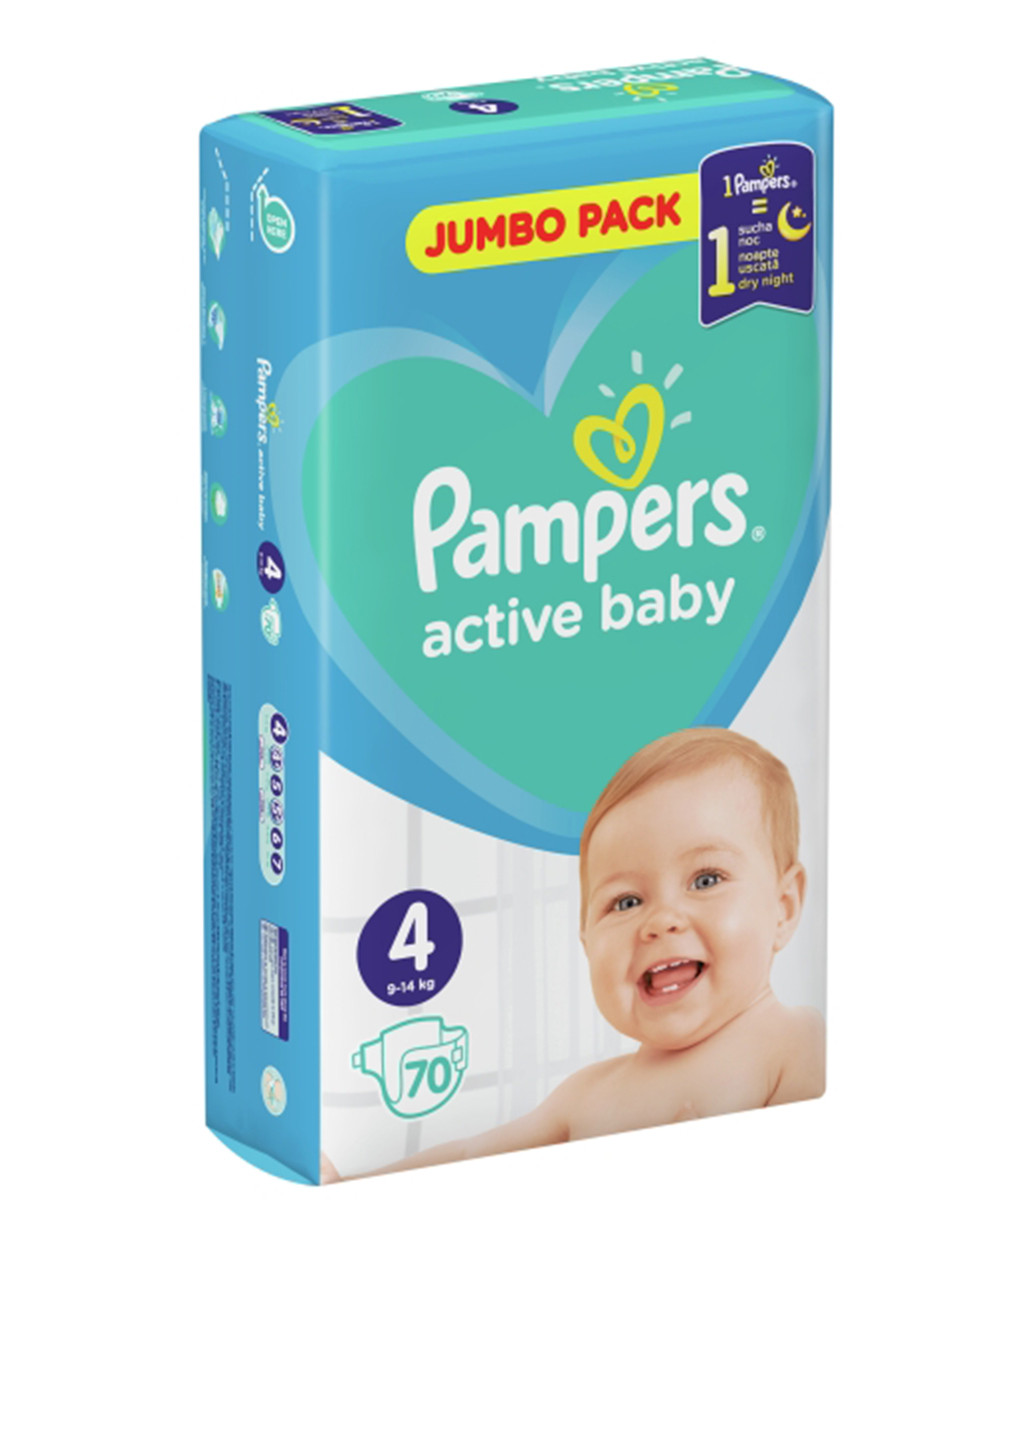 Подгузники Active Baby 4 (9-14 кг), (70 шт.) Pampers (130948057)